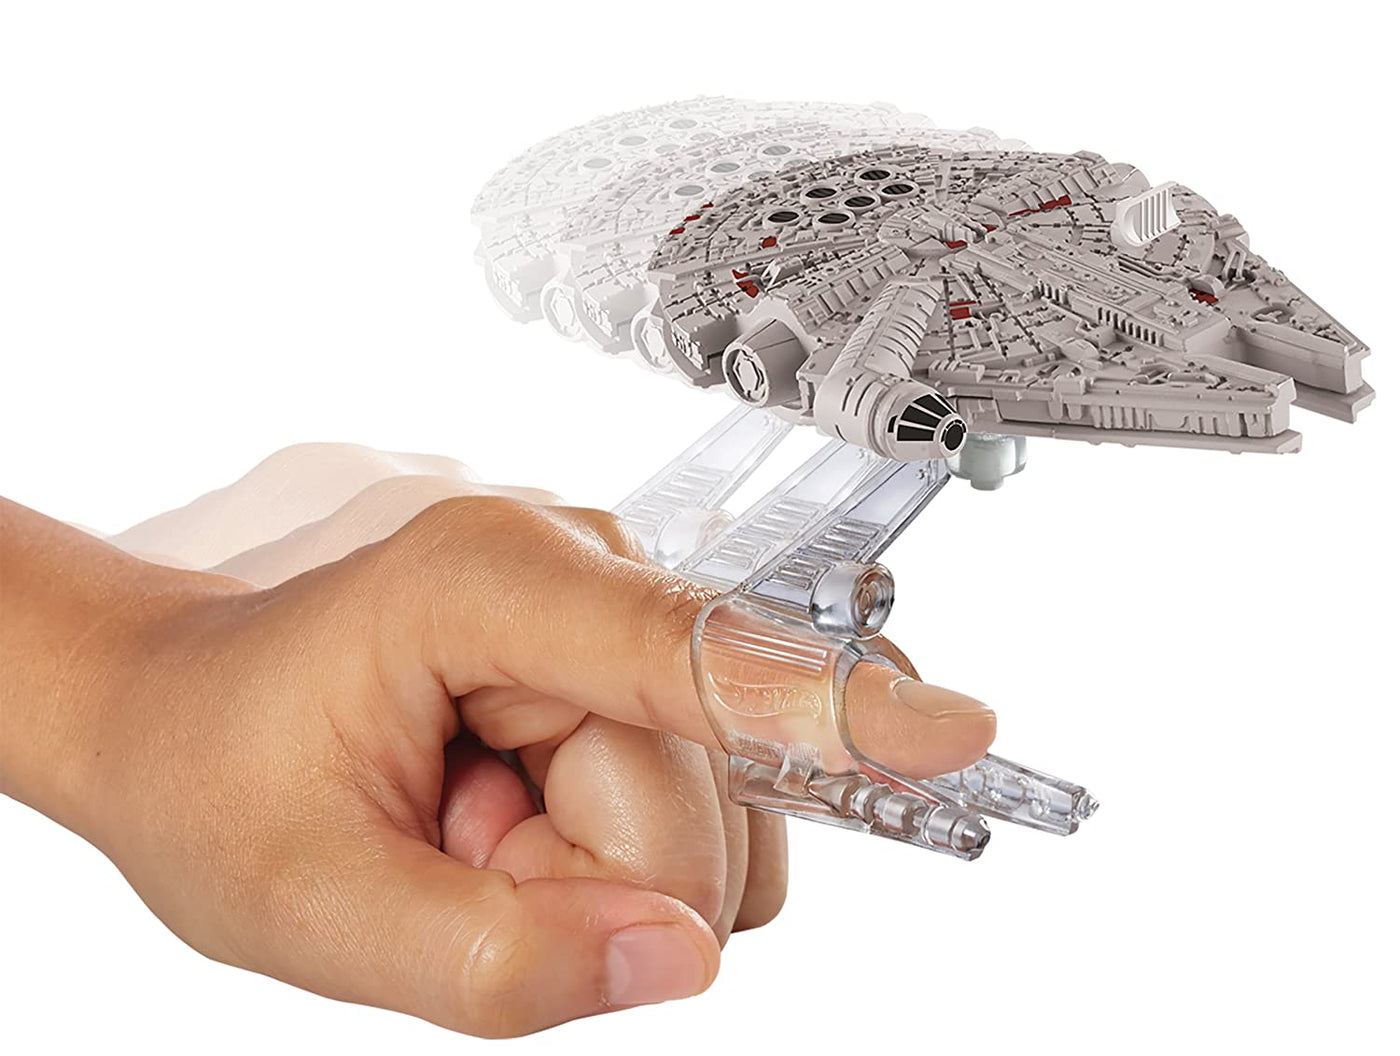 Star Wars Starship Millennium Falcon | Hot Wheels